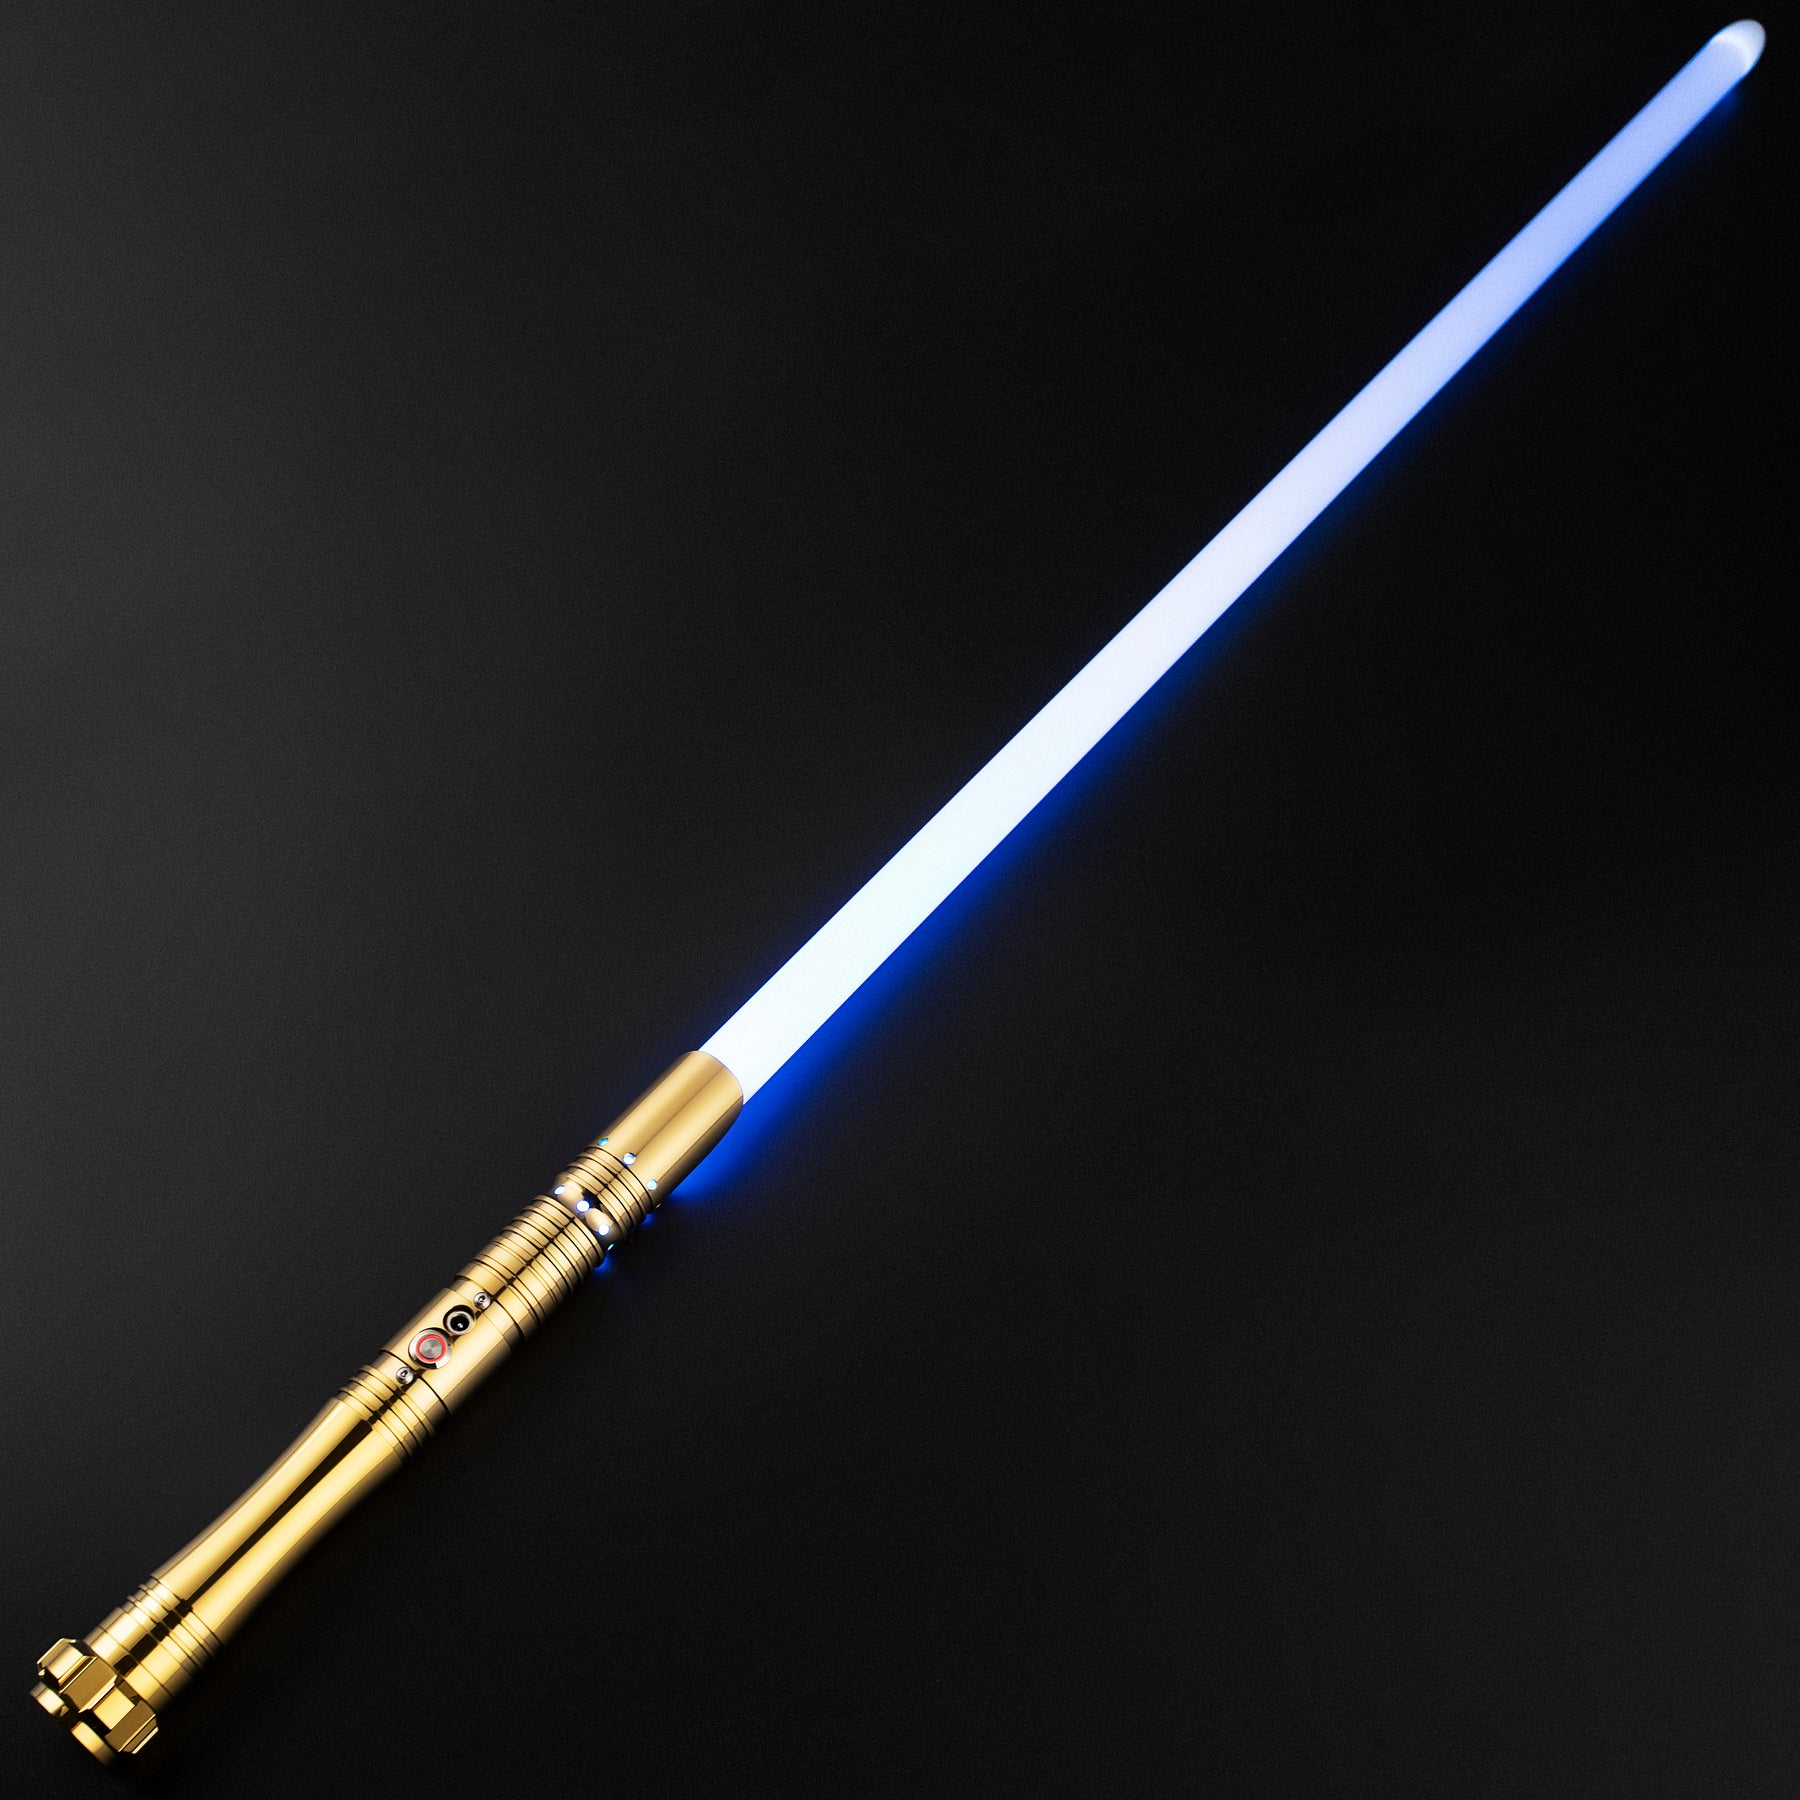 SaberCustom heavy dueling lightsaber fx smooth swing 9 sound fonts infinite color changing gold saber